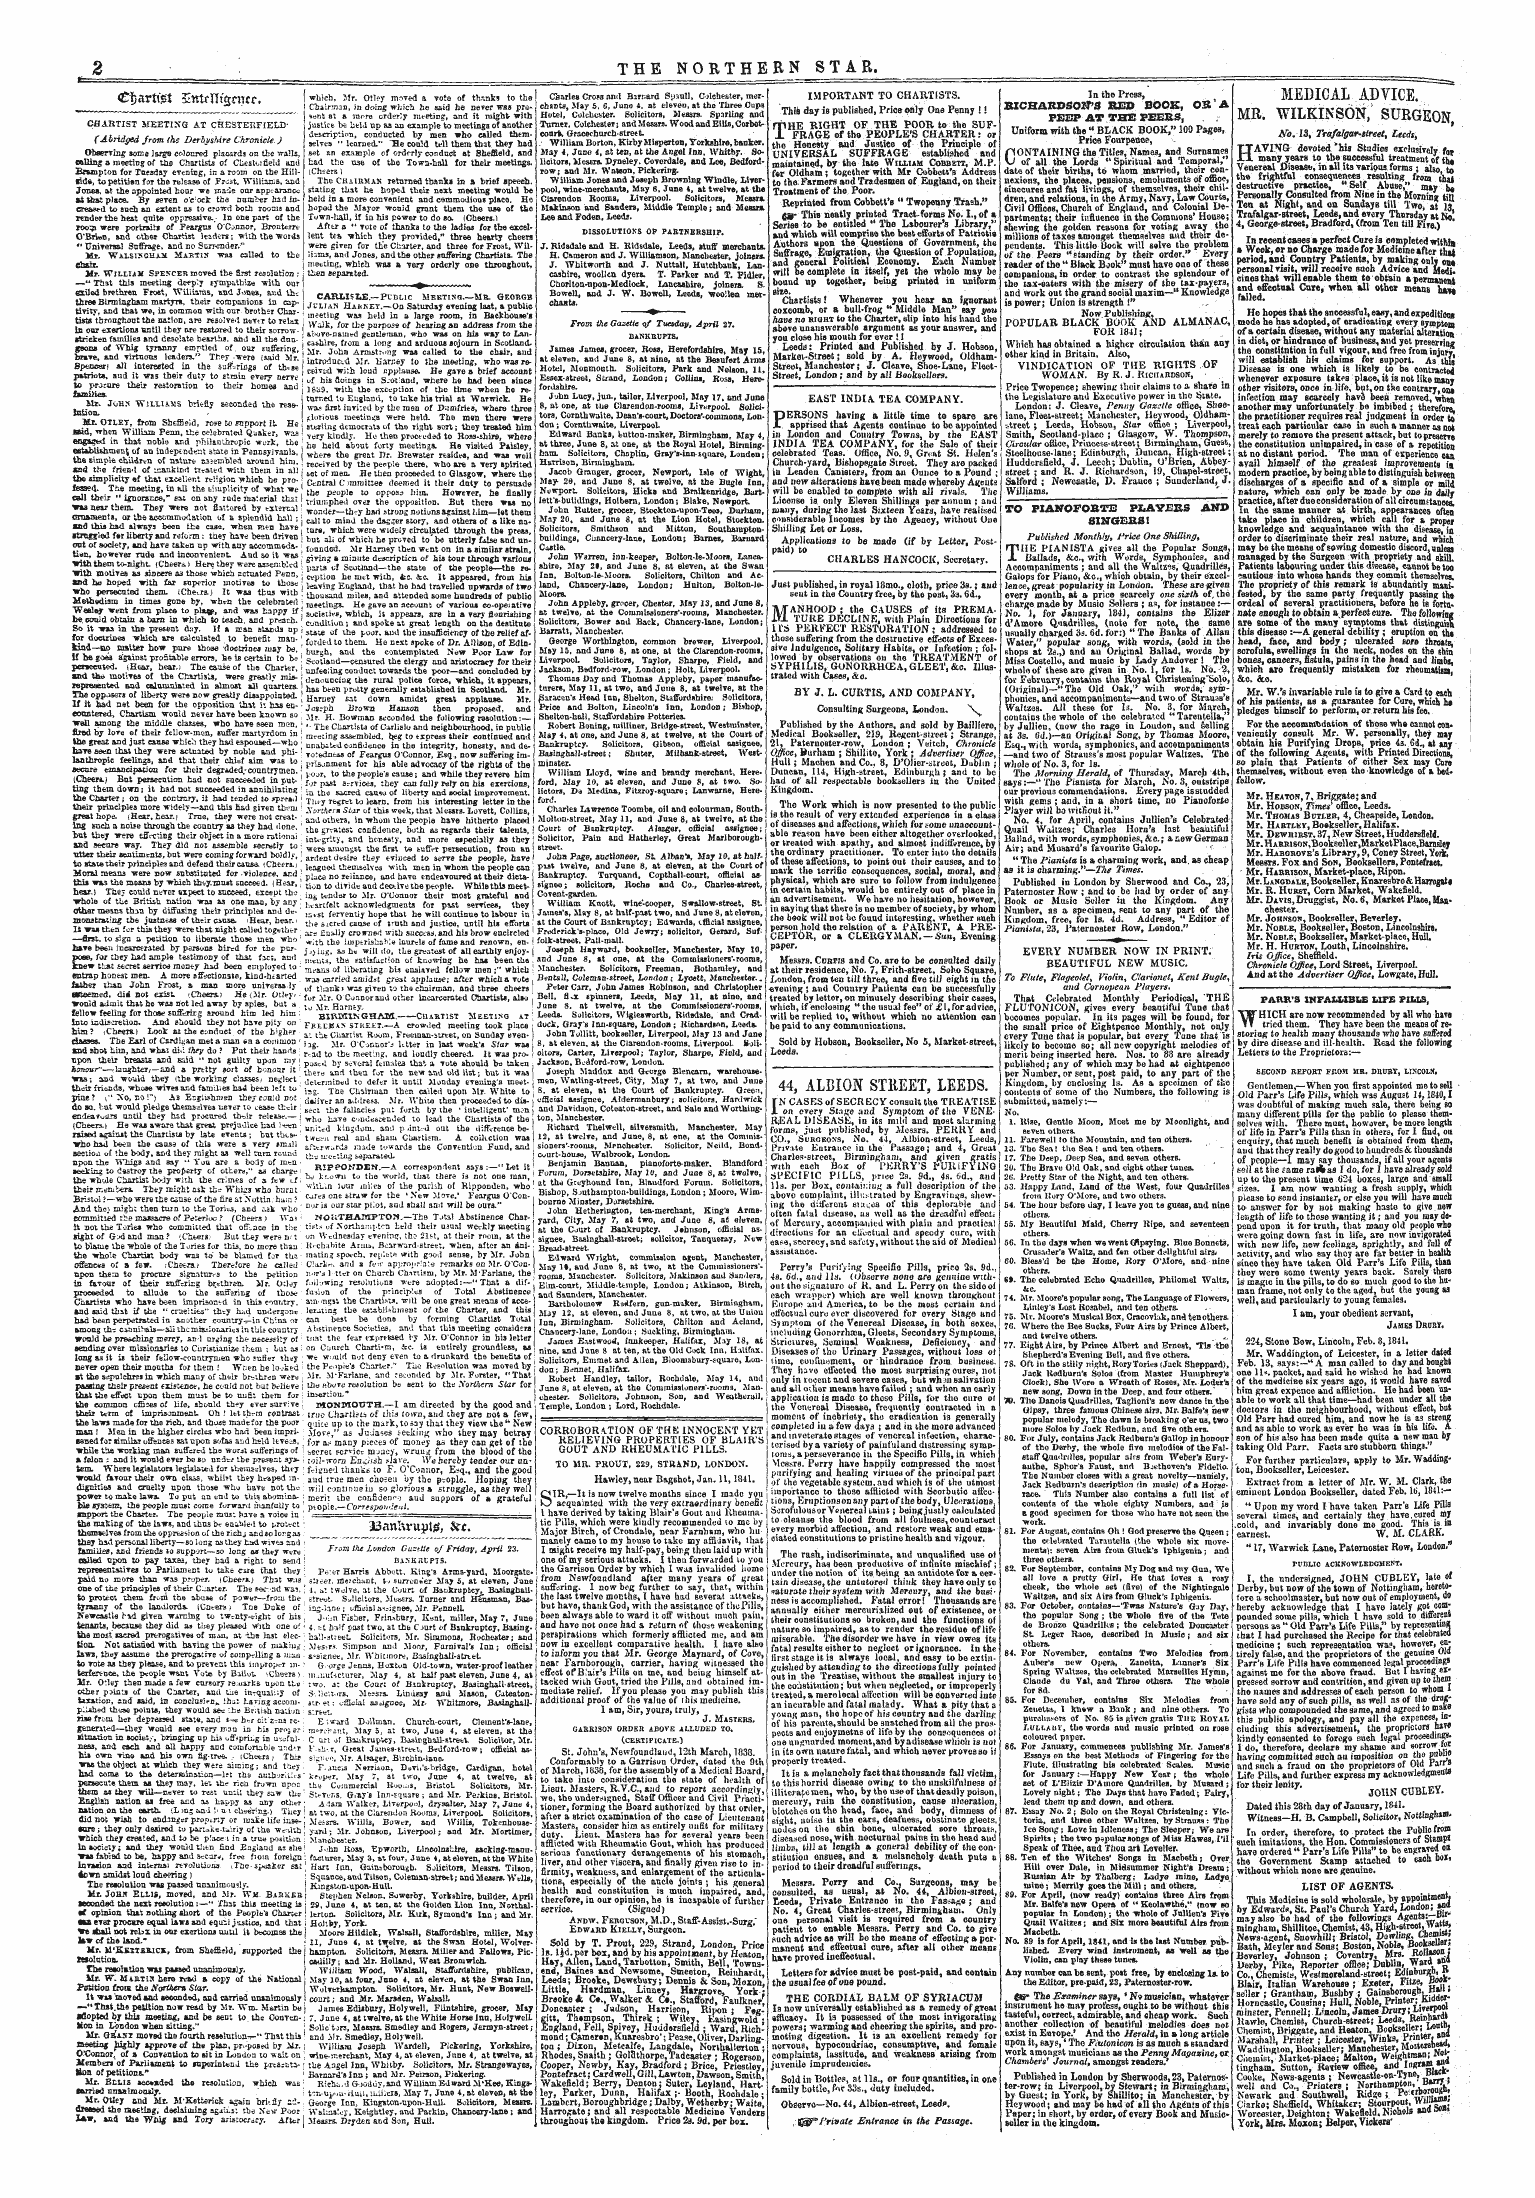 Northern Star (1837-1852): jS F Y, 3rd edition - 33ani\Riuij0, &C